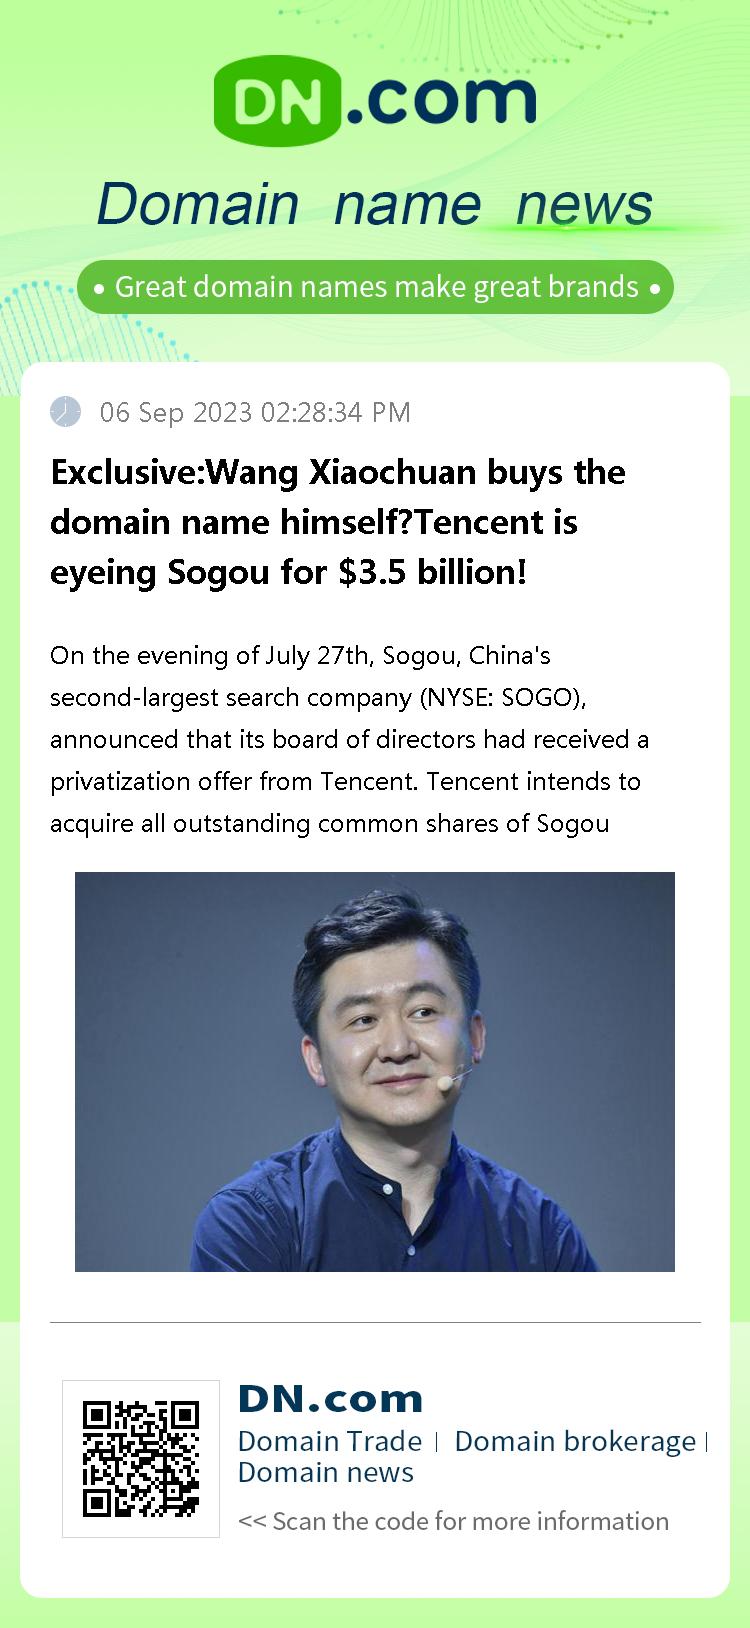 Exclusive:Wang Xiaochuan buys the domain name himself?Tencent is eyeing Sogou for $3.5 billion!